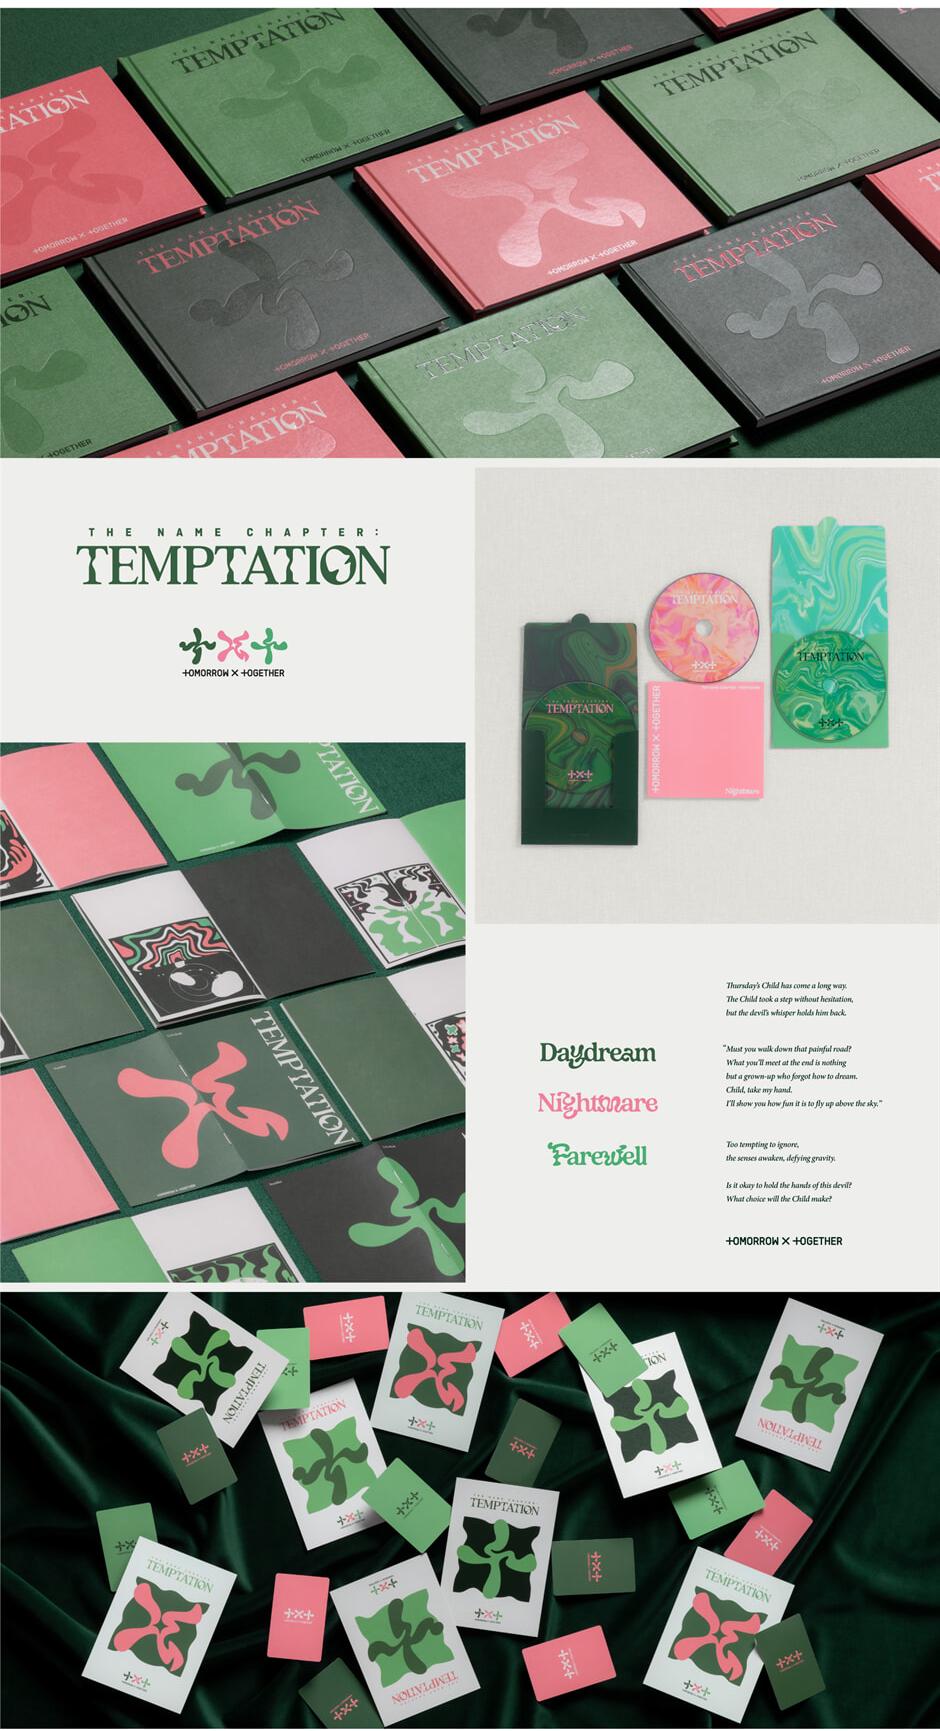 K-Pop CD TXT - 5th EP Album 'The Name Chapter: Temptation'